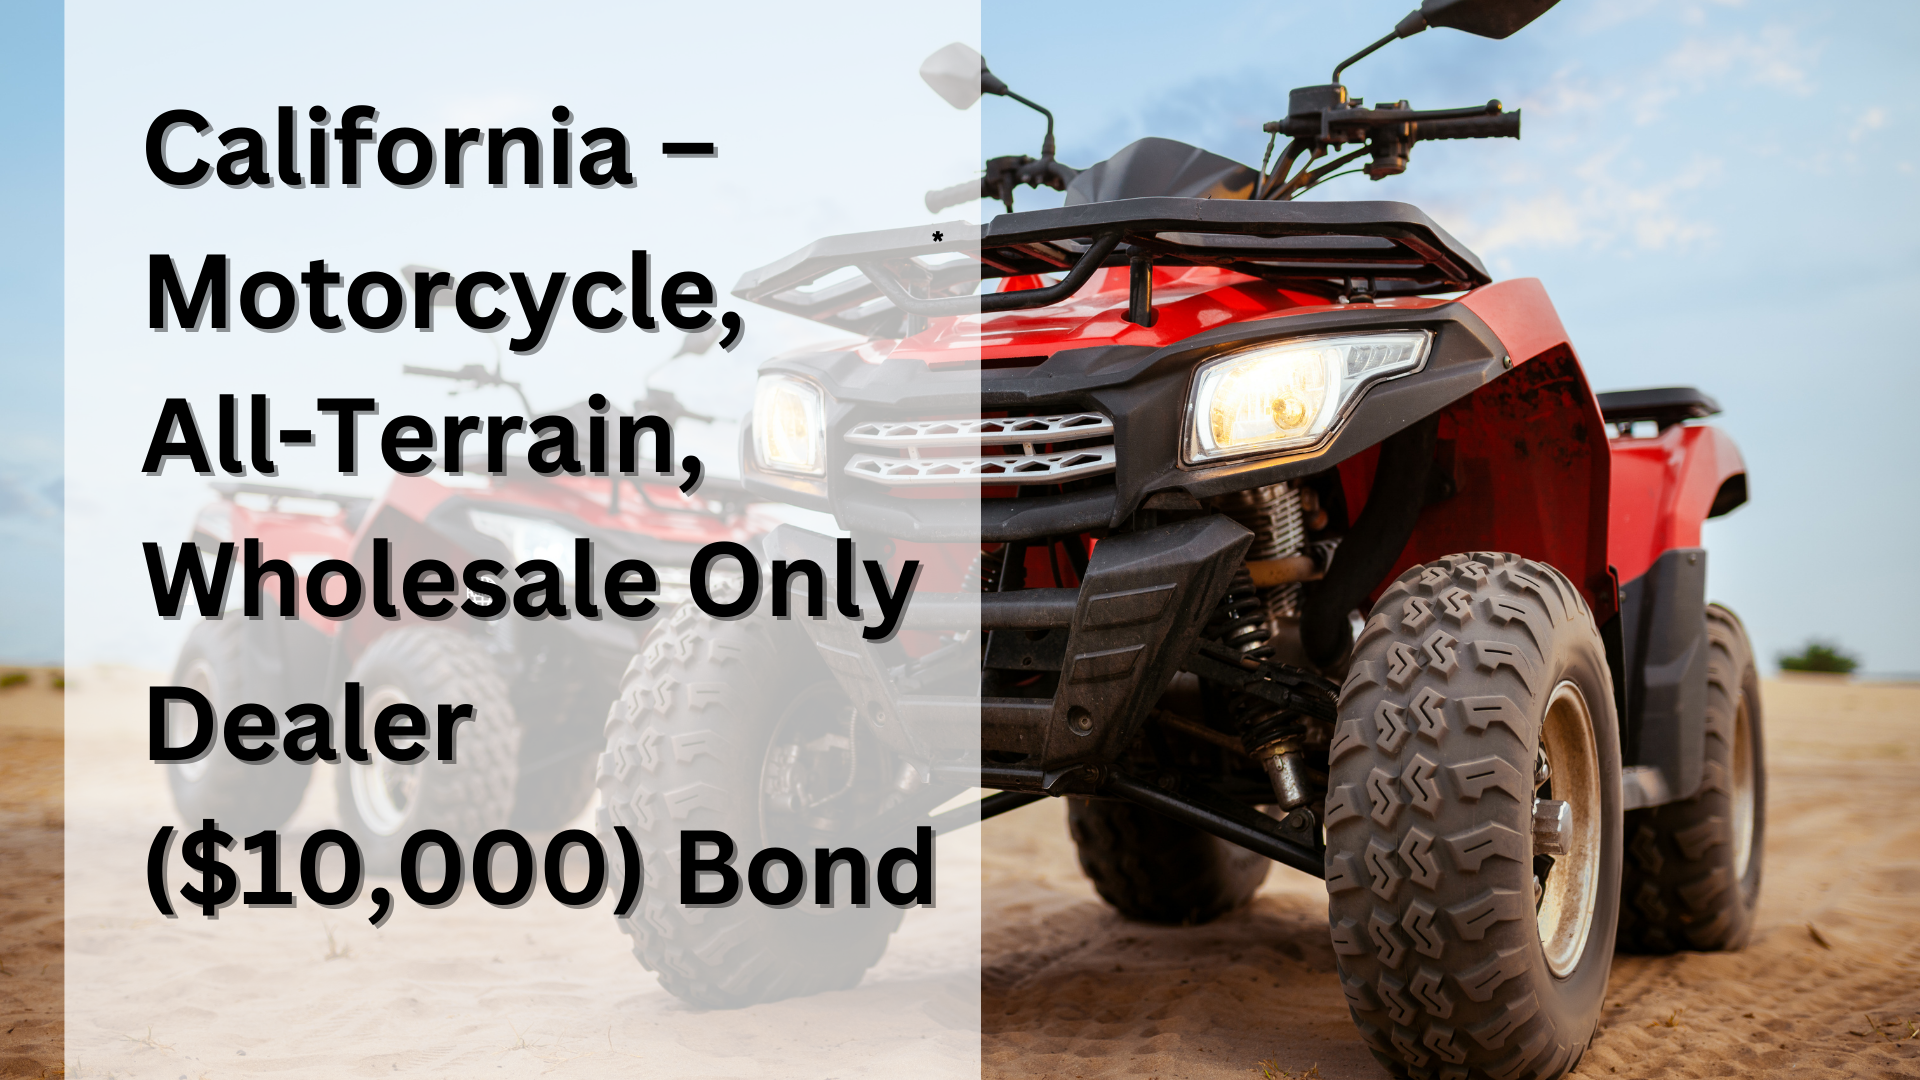 California – Motorcycle, All-Terrain, Wholesale Only Dealer ($10,000) Bond